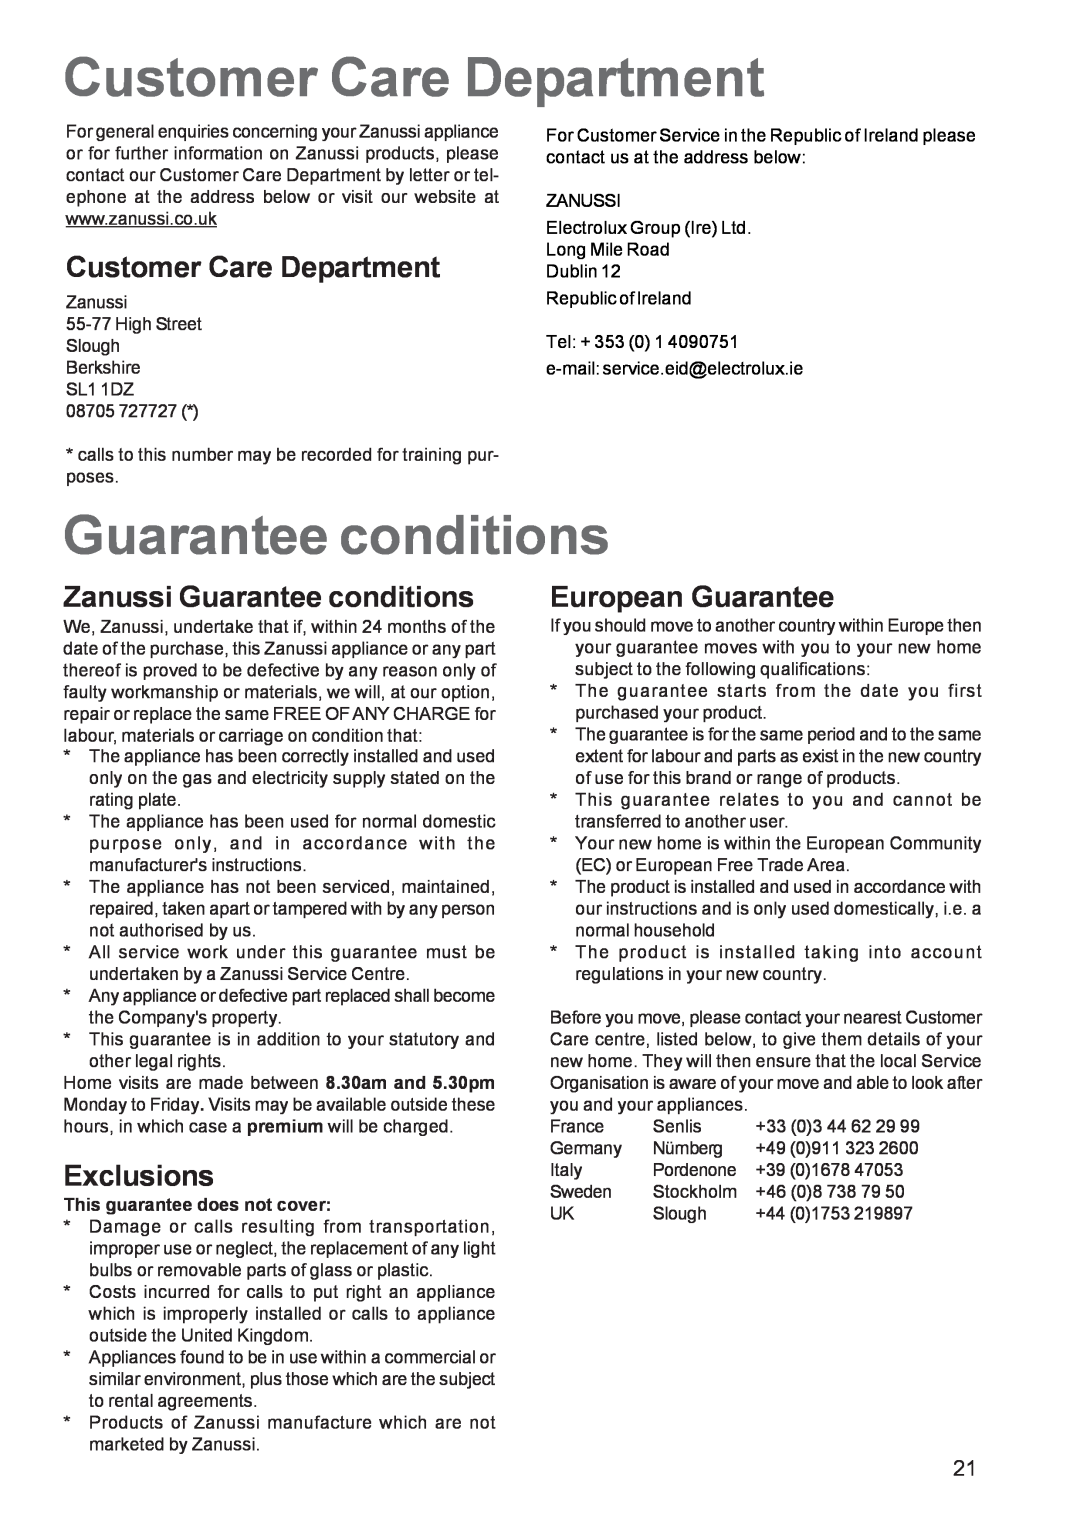 Zanussi ZPB 1260 manual Customer Care Department, Zanussi Guarantee conditions, Exclusions, European Guarantee 